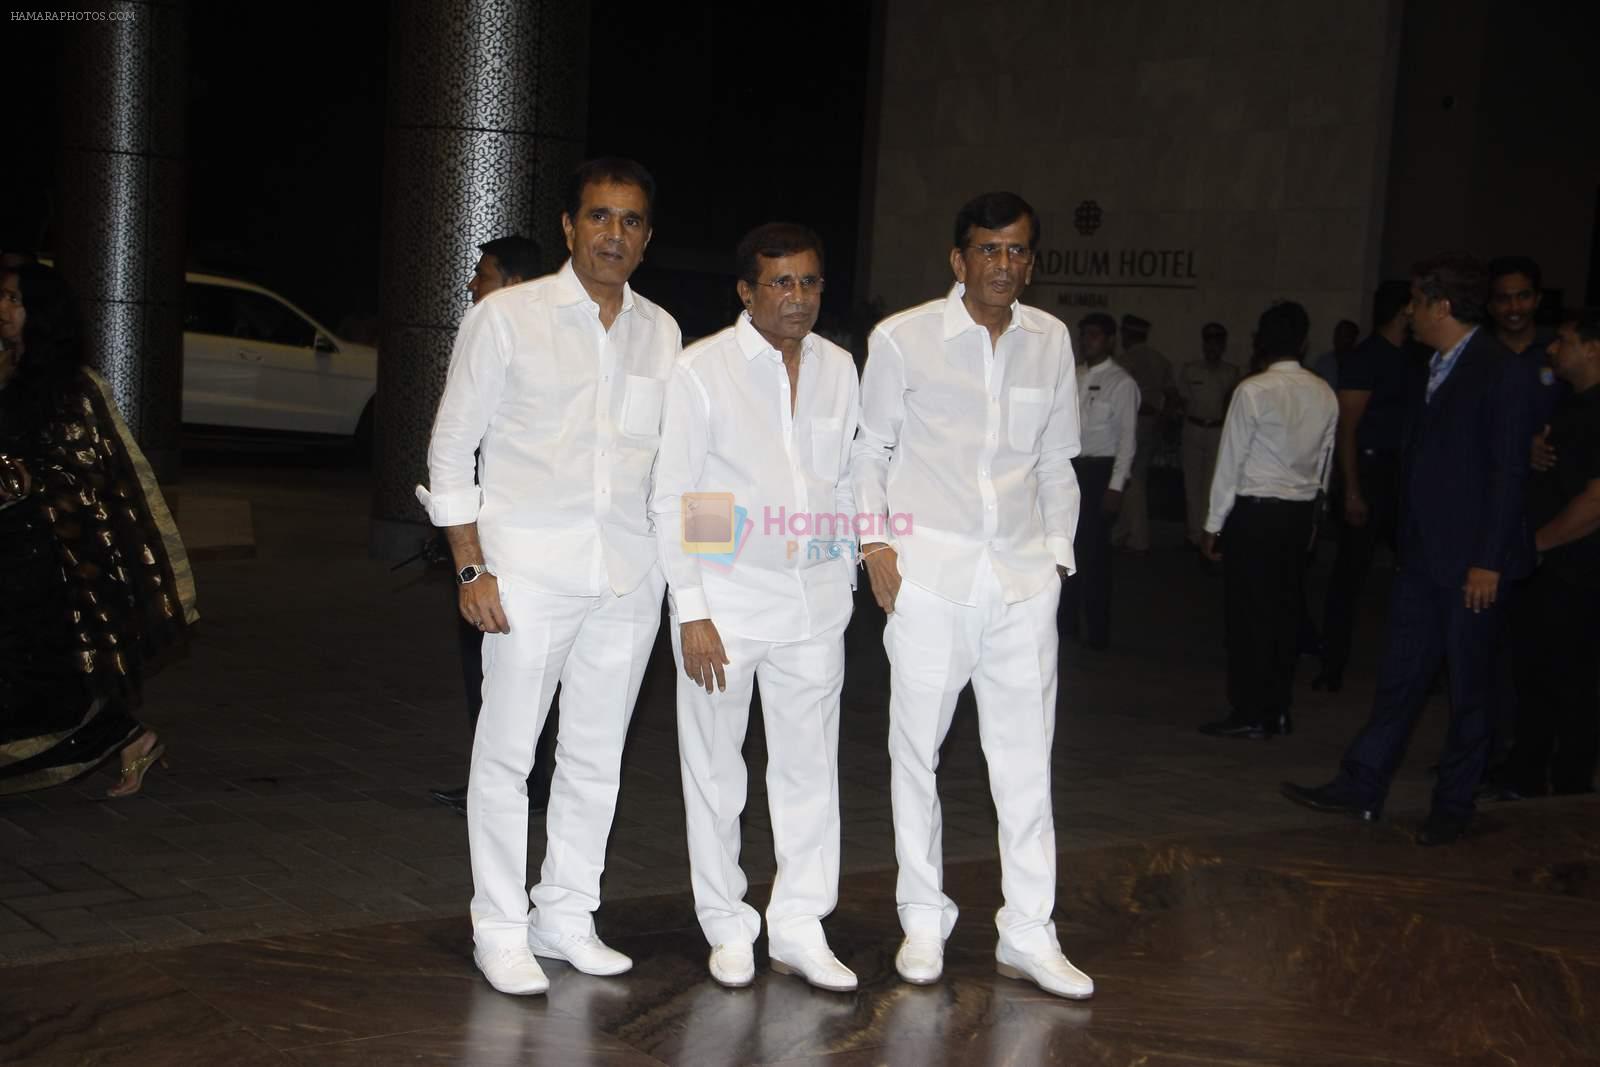 Abbas mastan at Shahid Kapoor and Mira Rajput's wedding reception in Mumbai on 12th July 2015